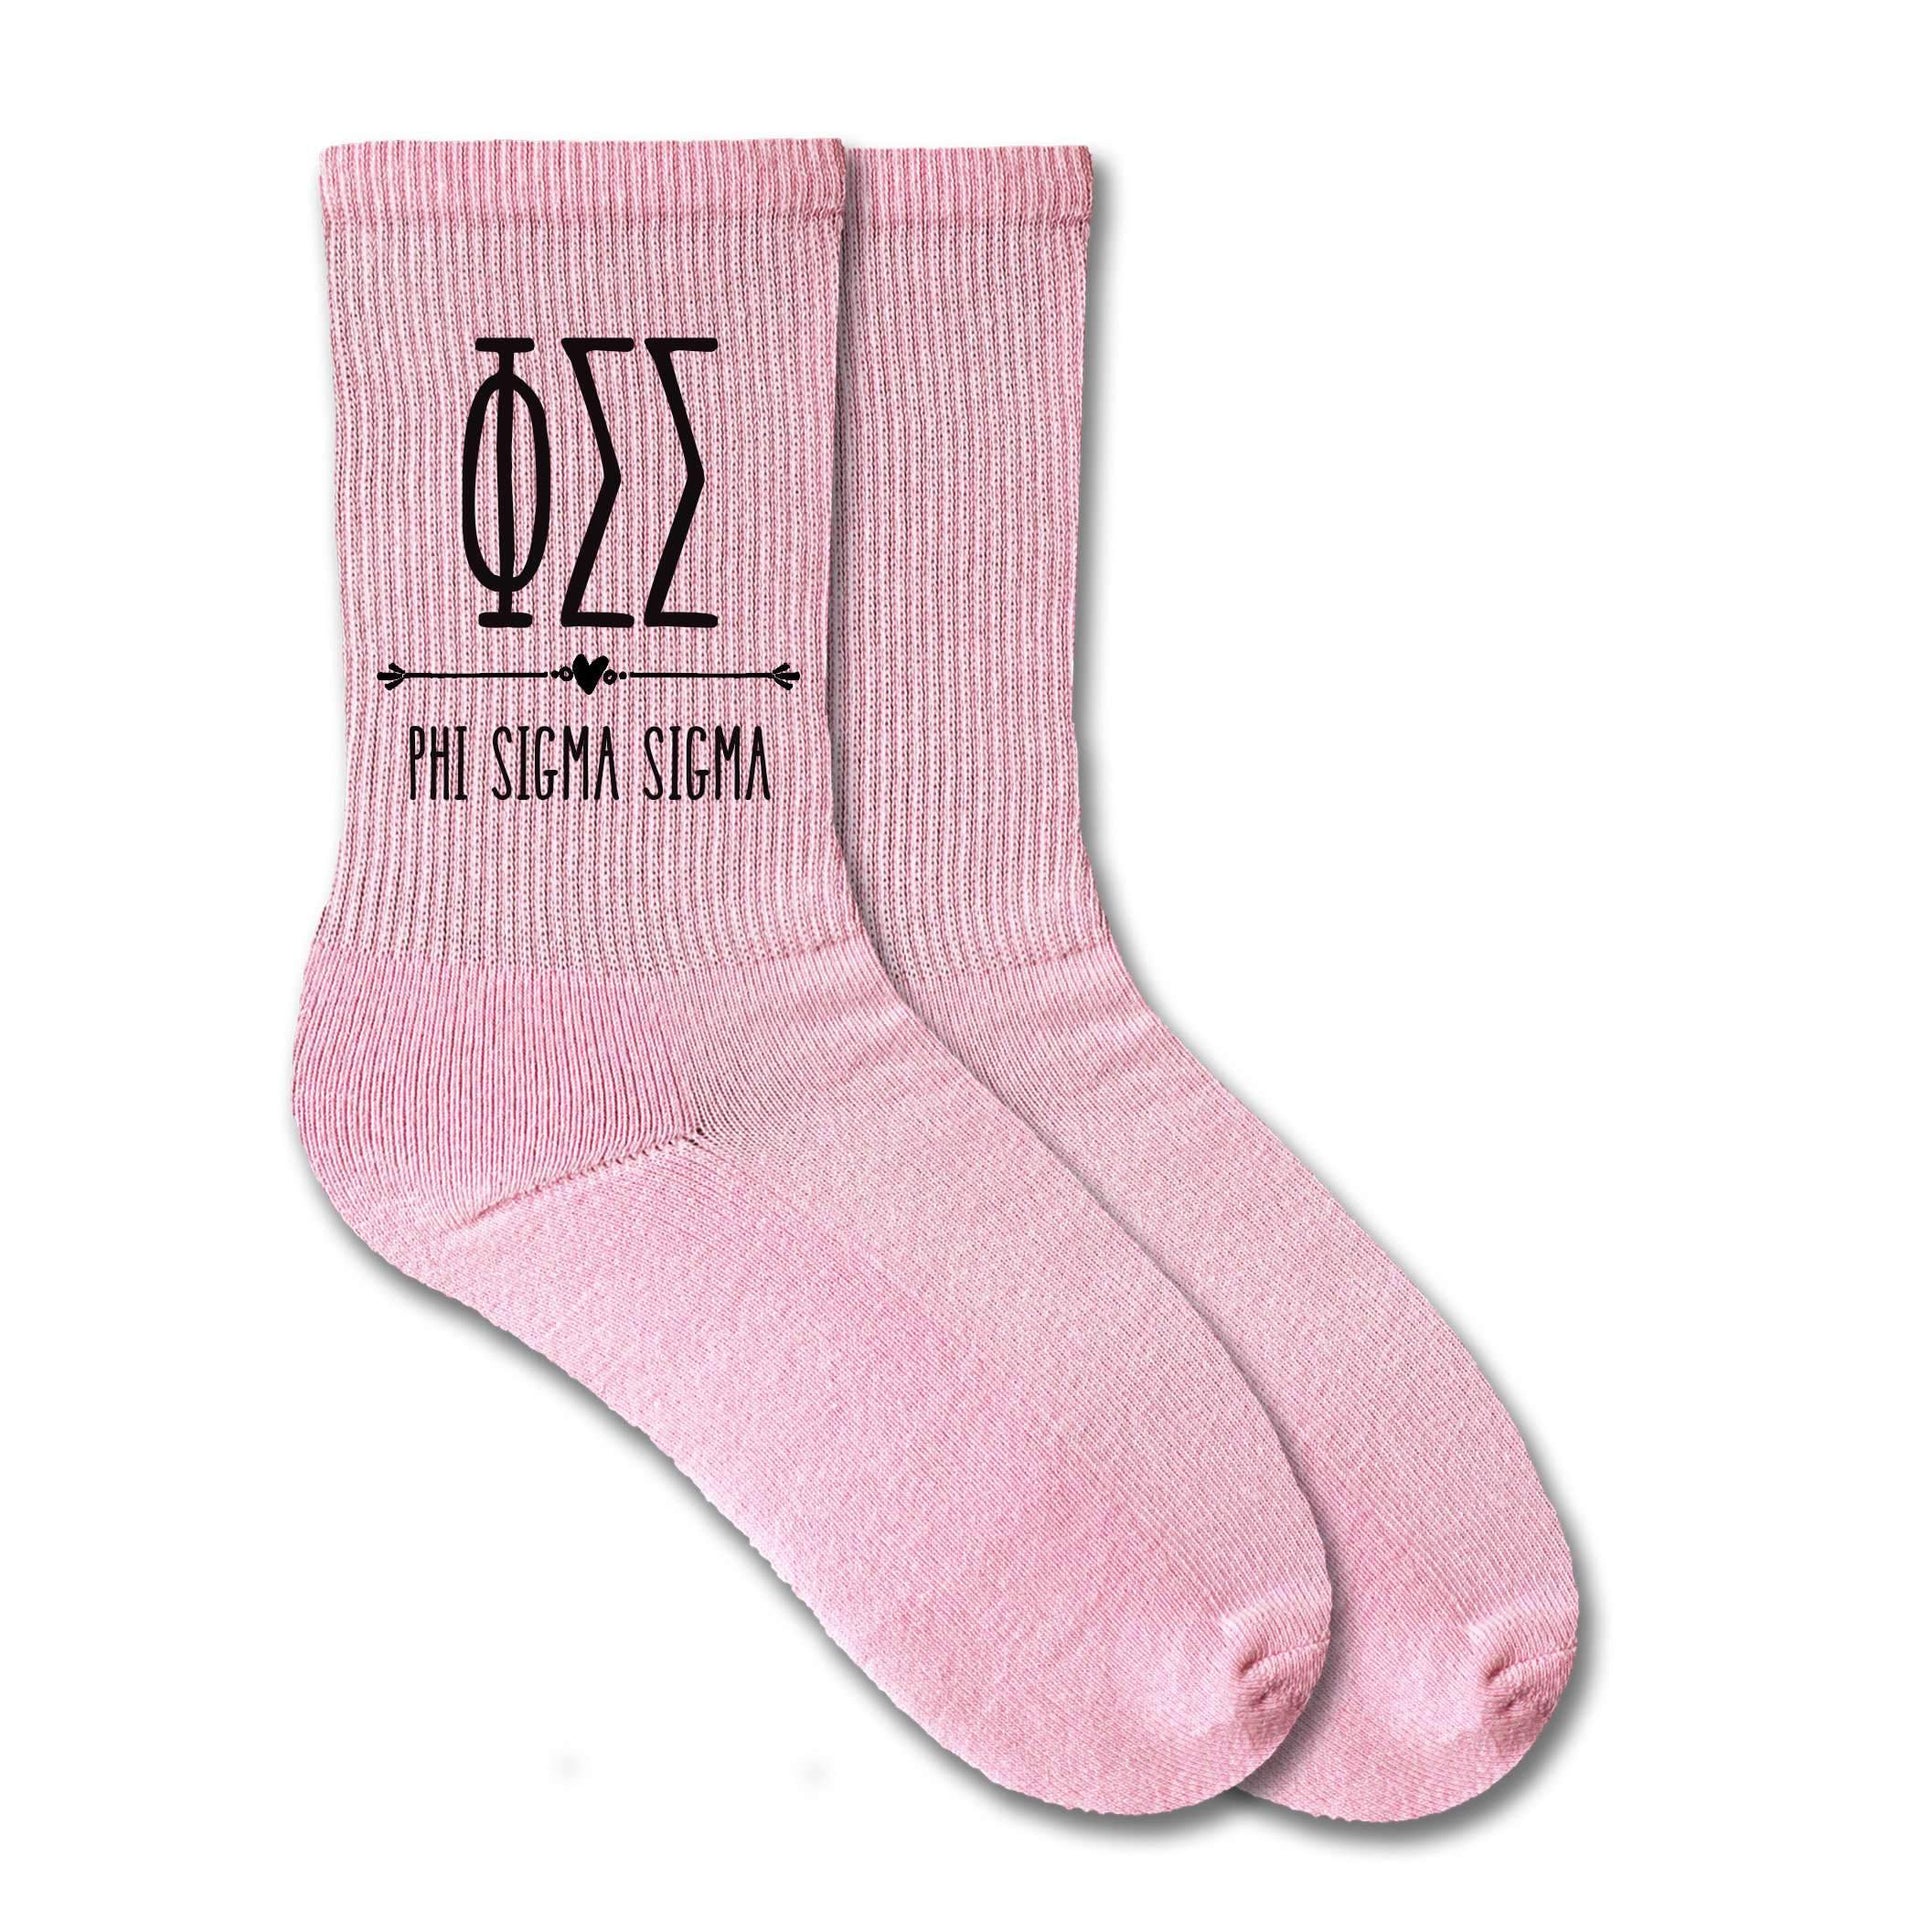 Phi Sigma Sigma sorority name and letters custom printed on pink cotton crew socks